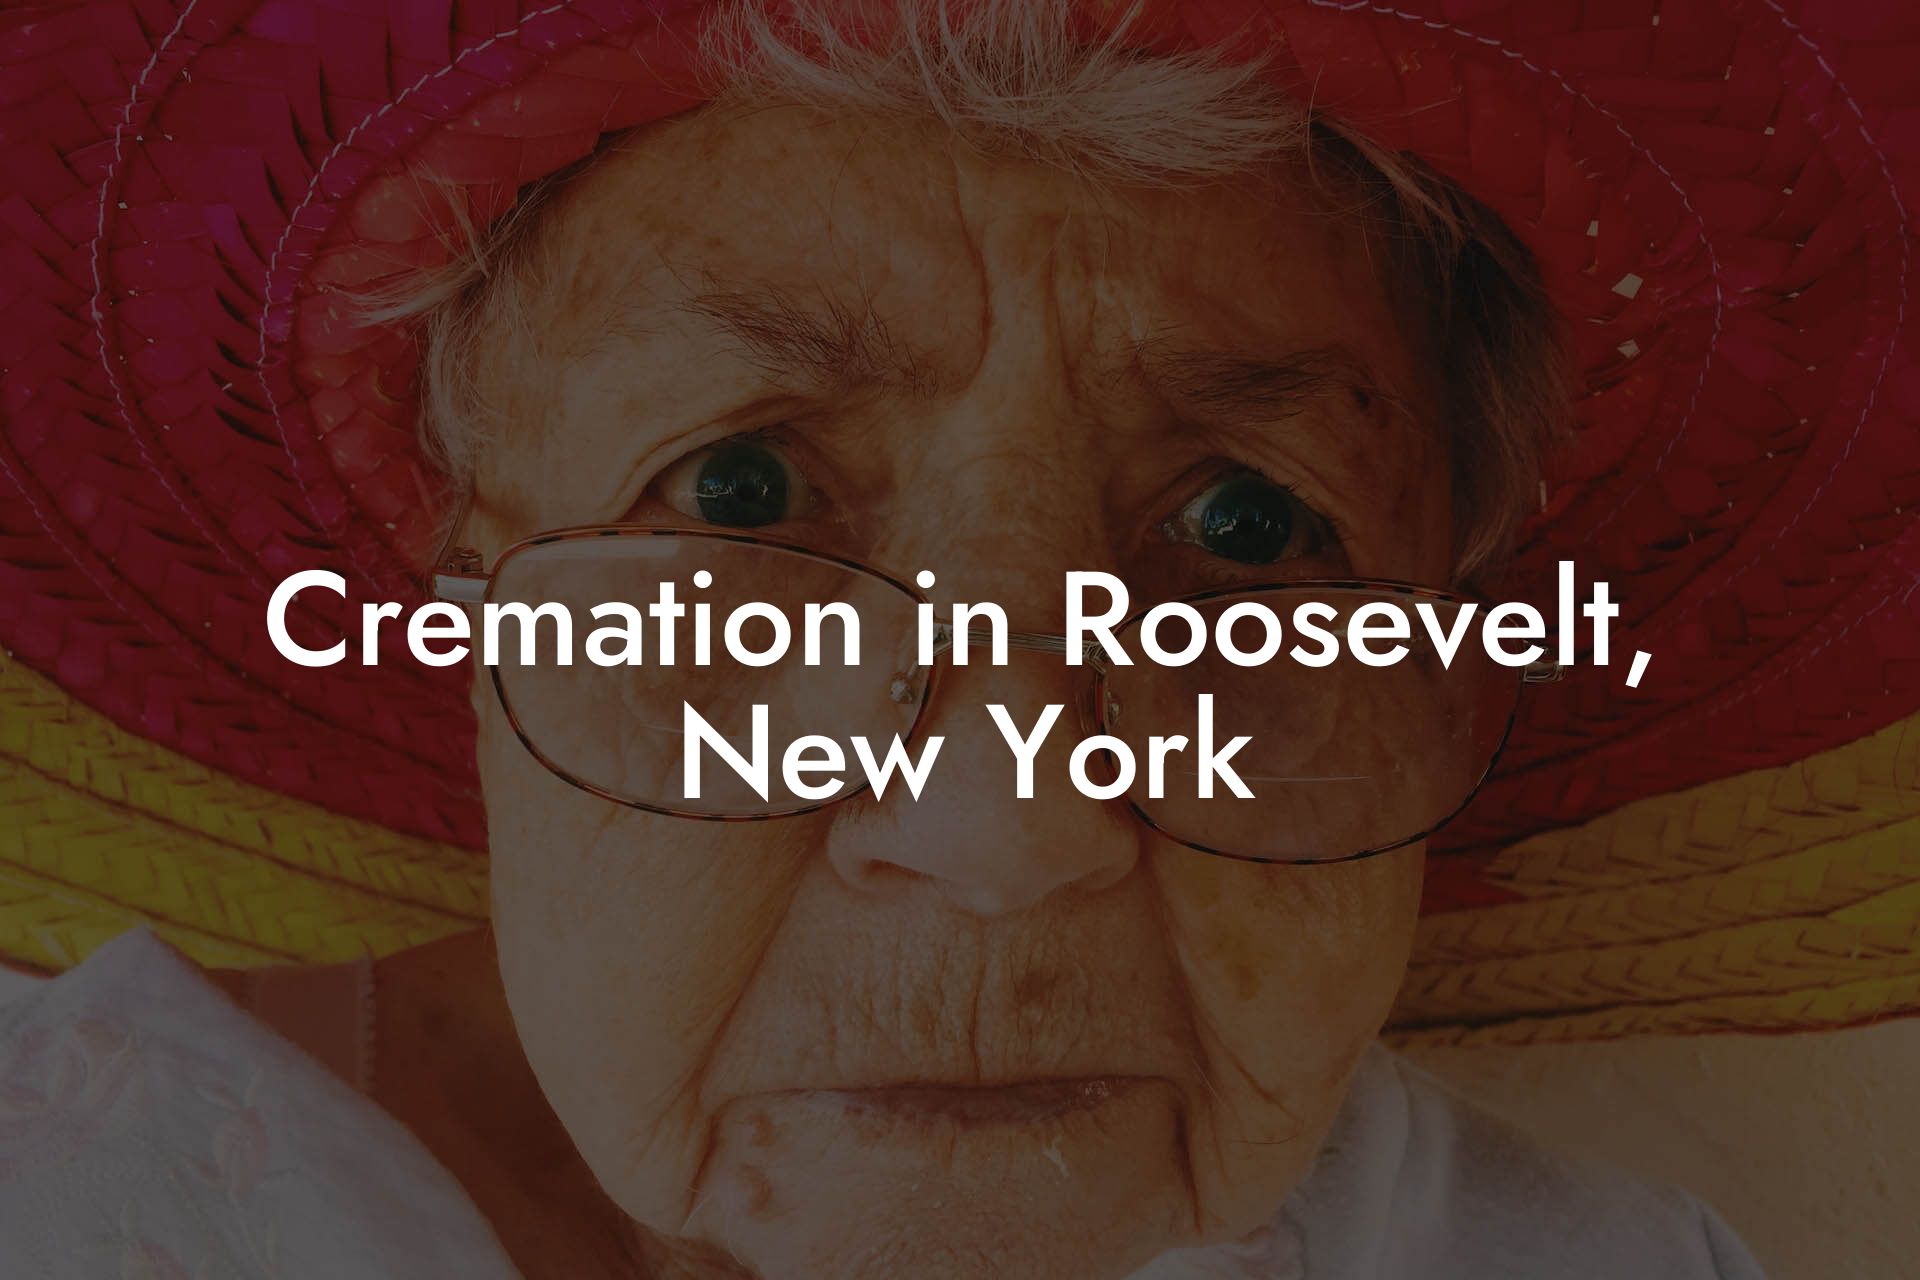 Cremation in Roosevelt, New York